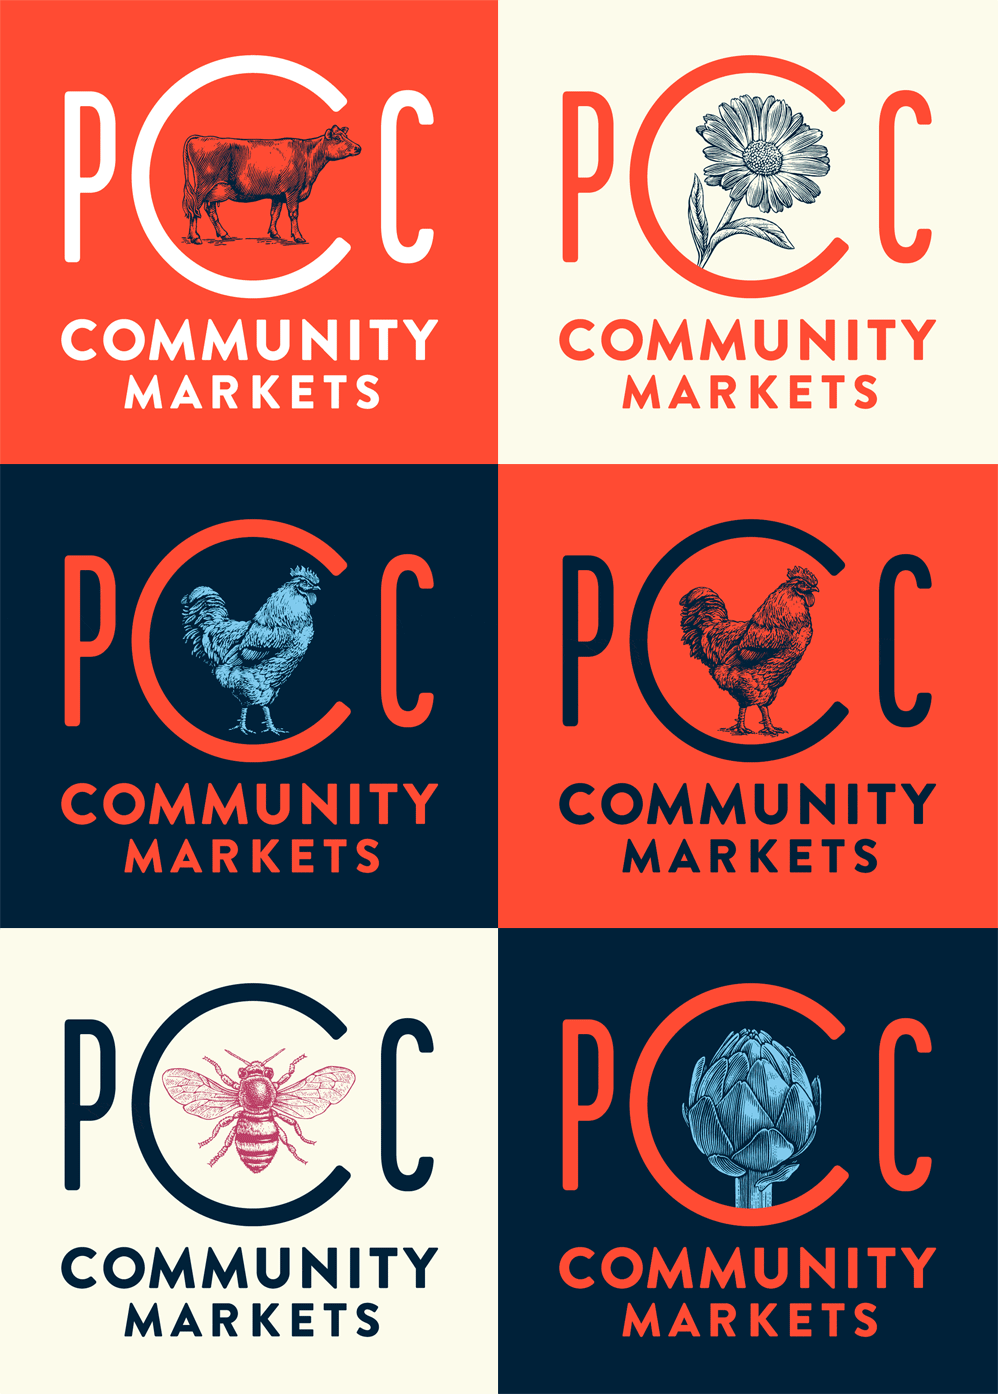 Community Market Logo - Brand New: New Logo and Identity for PCC Community Markets by Wexley ...